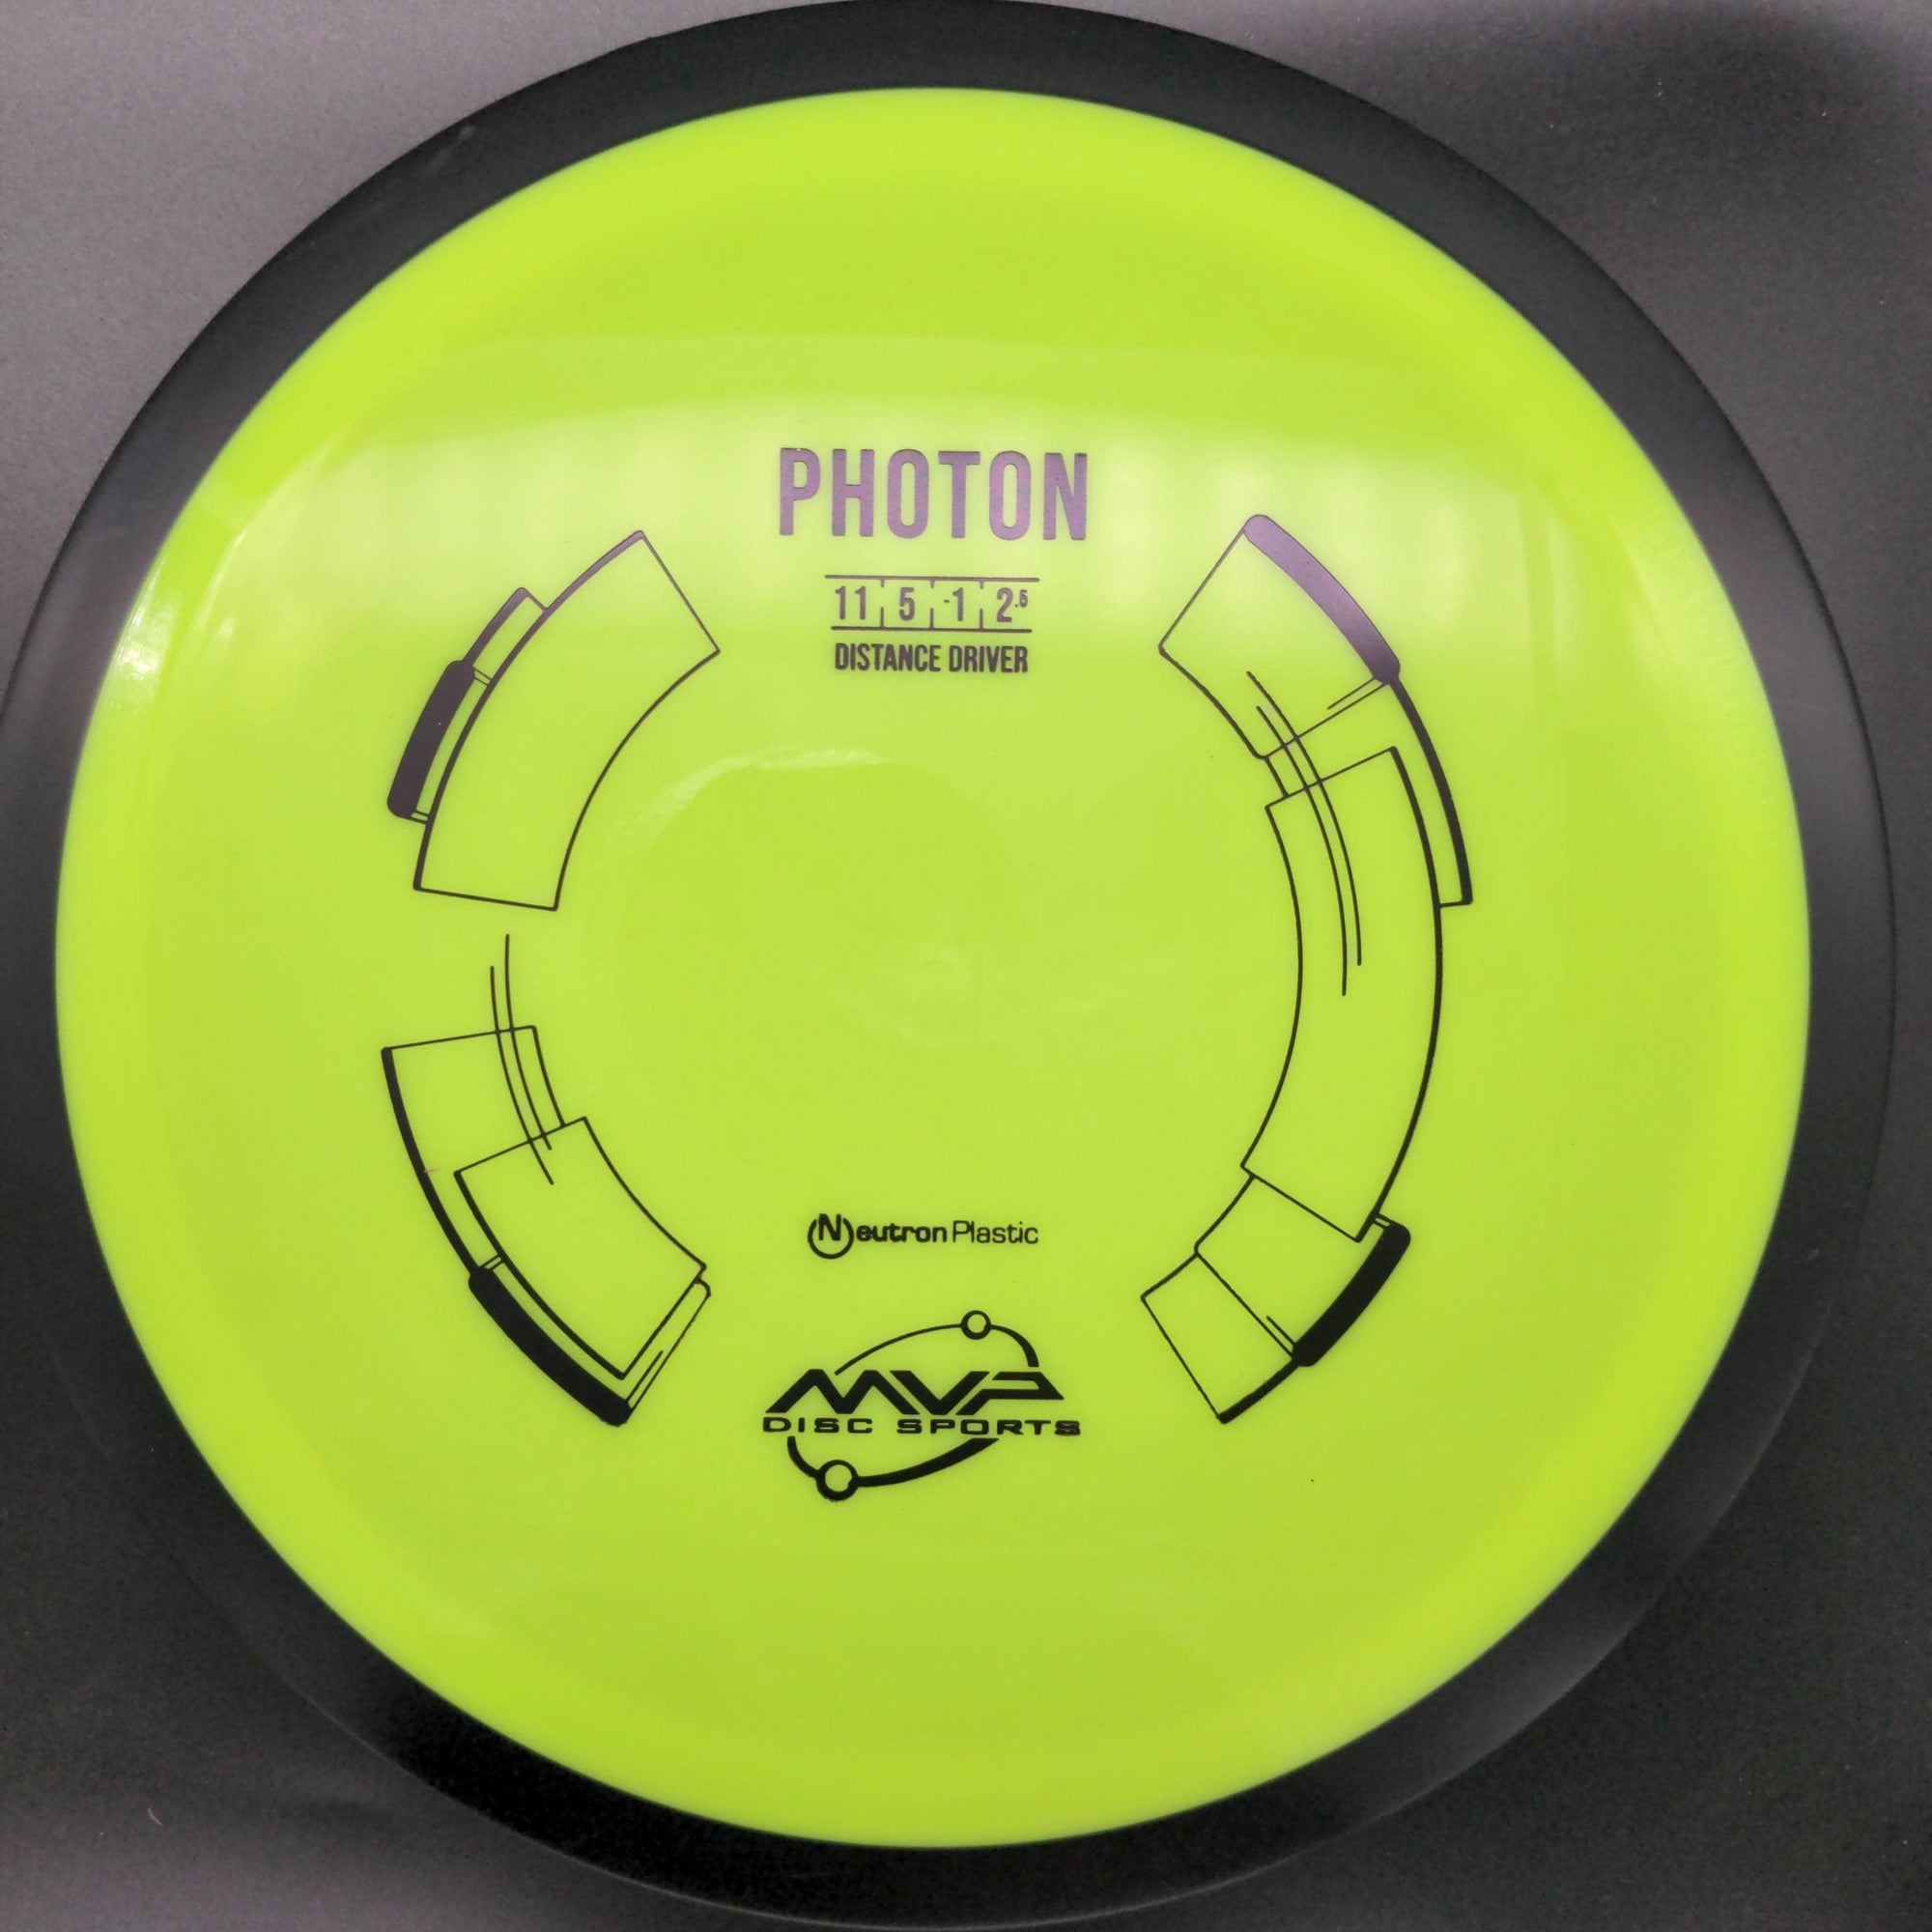 MVP Distance Driver Photon, Neutron